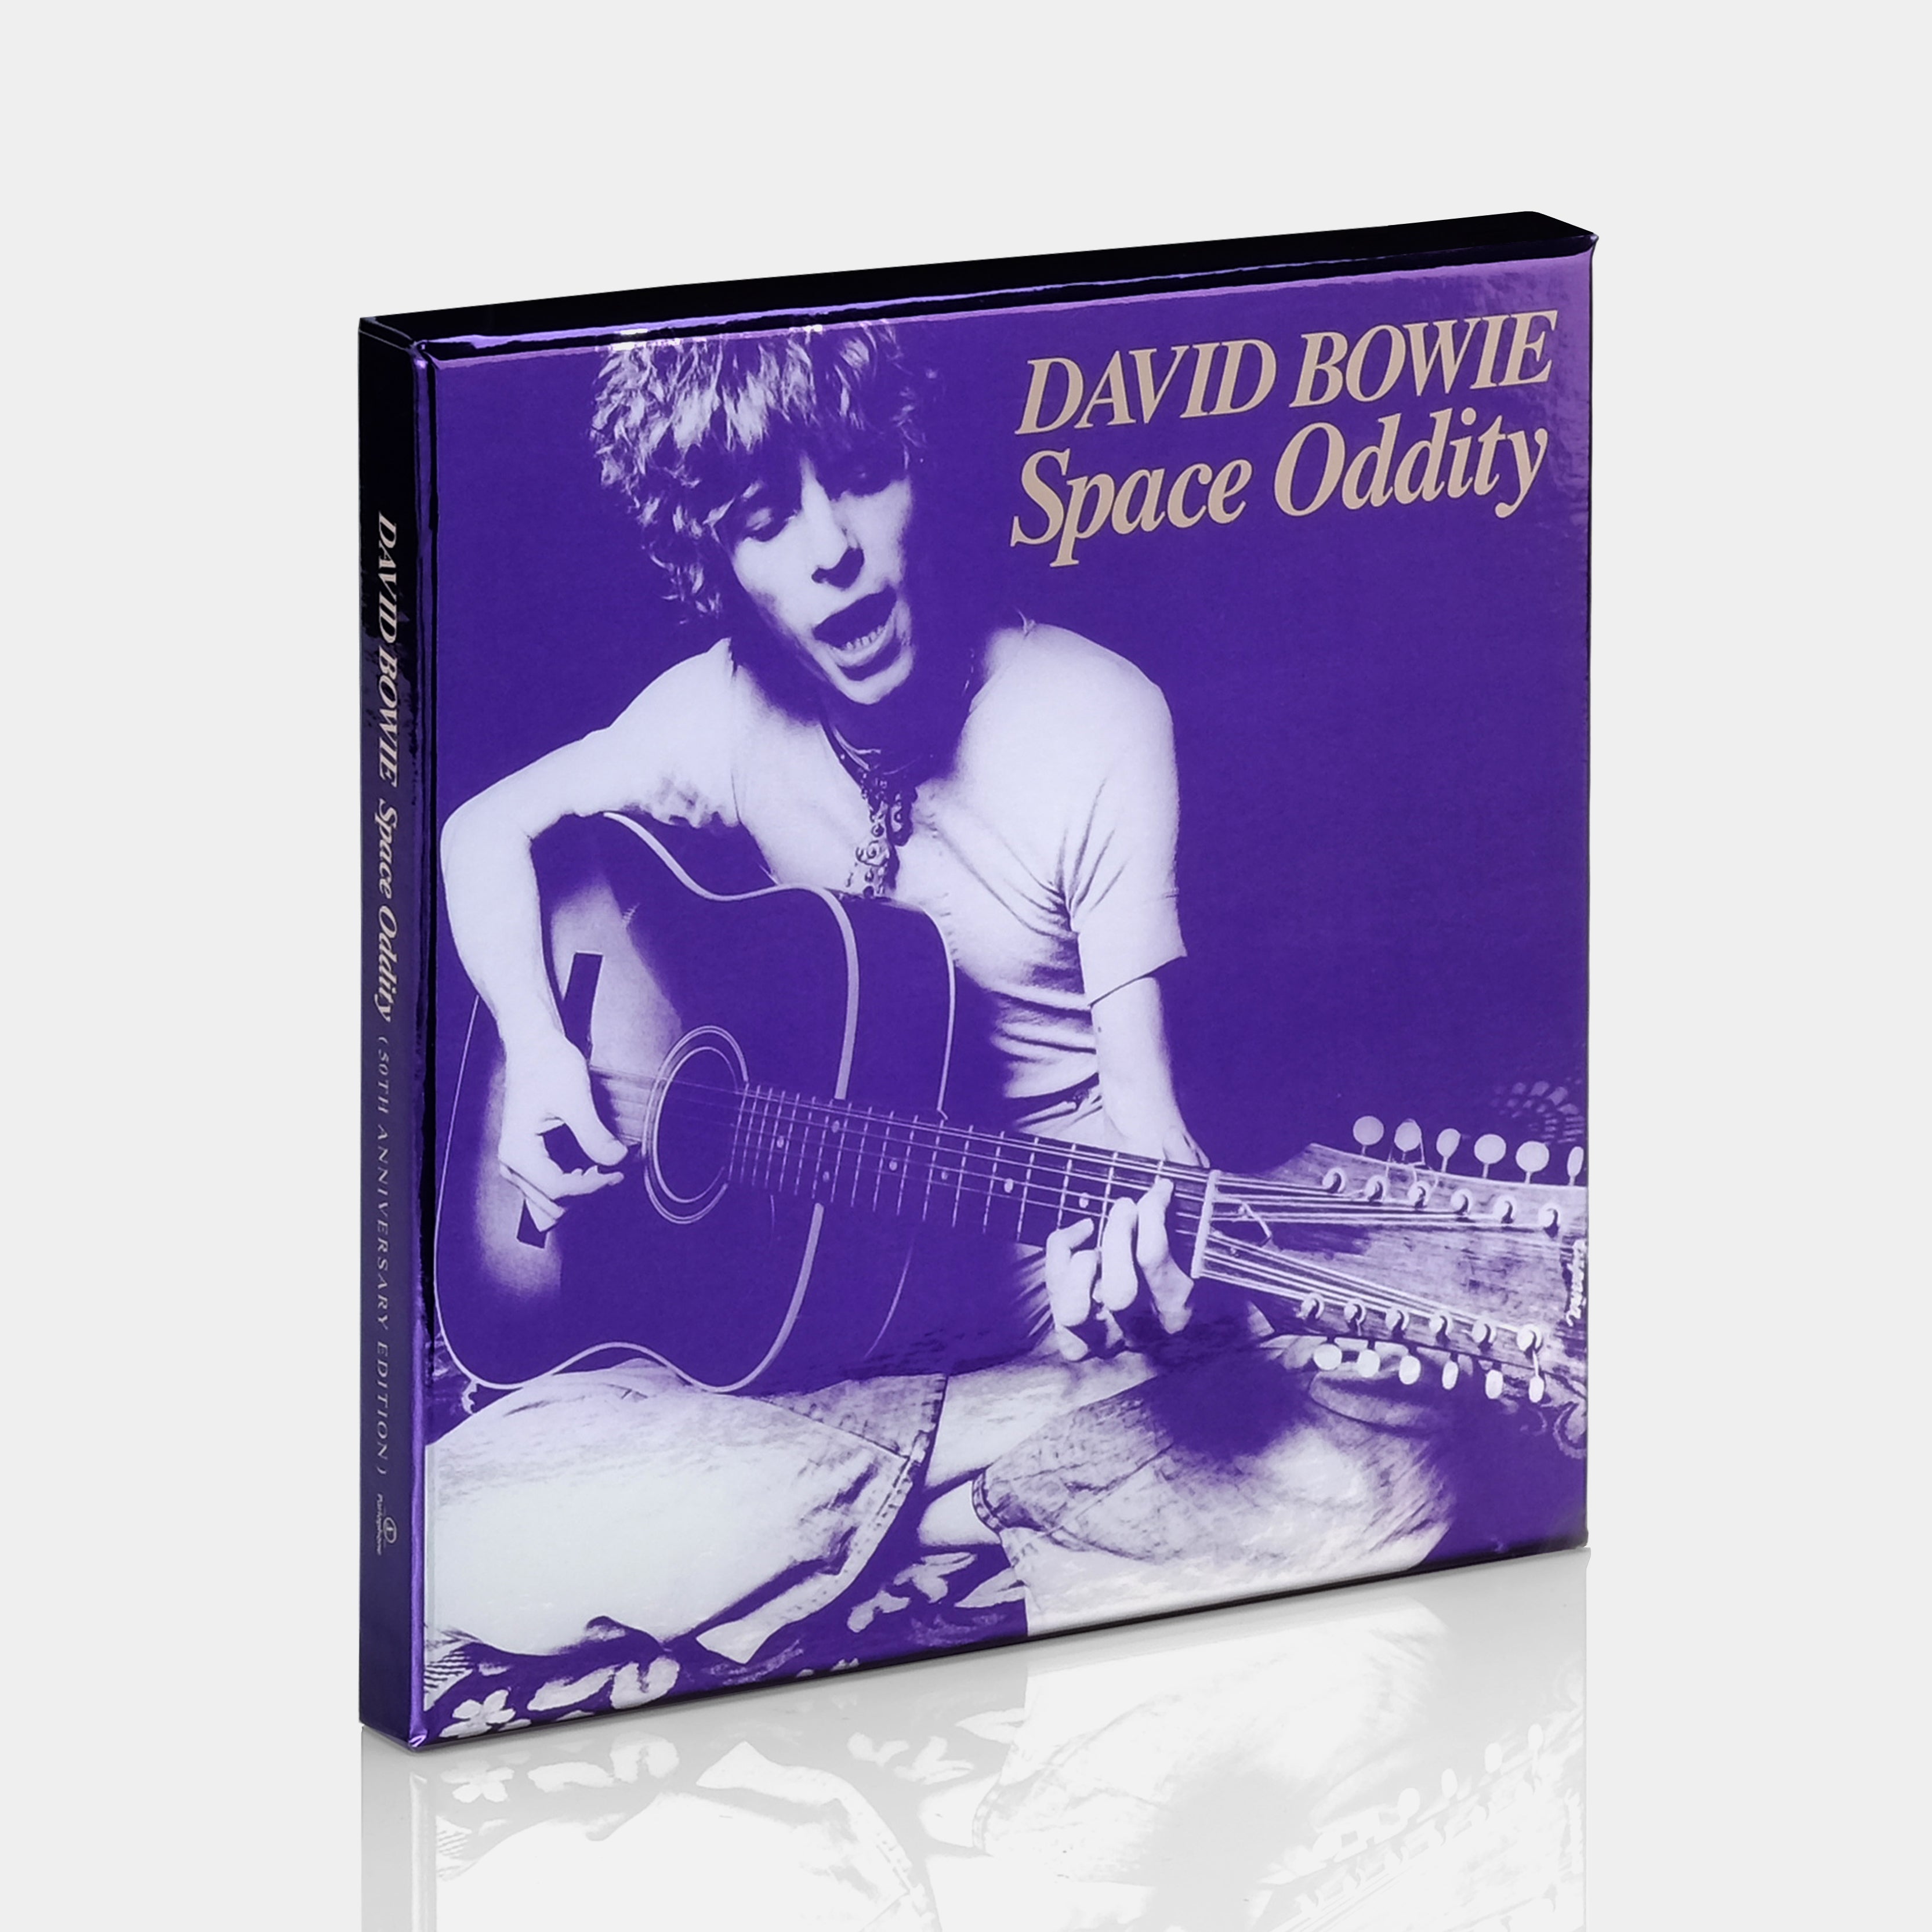 David Bowie - Space Oddity 2x7" Single Vinyl Record